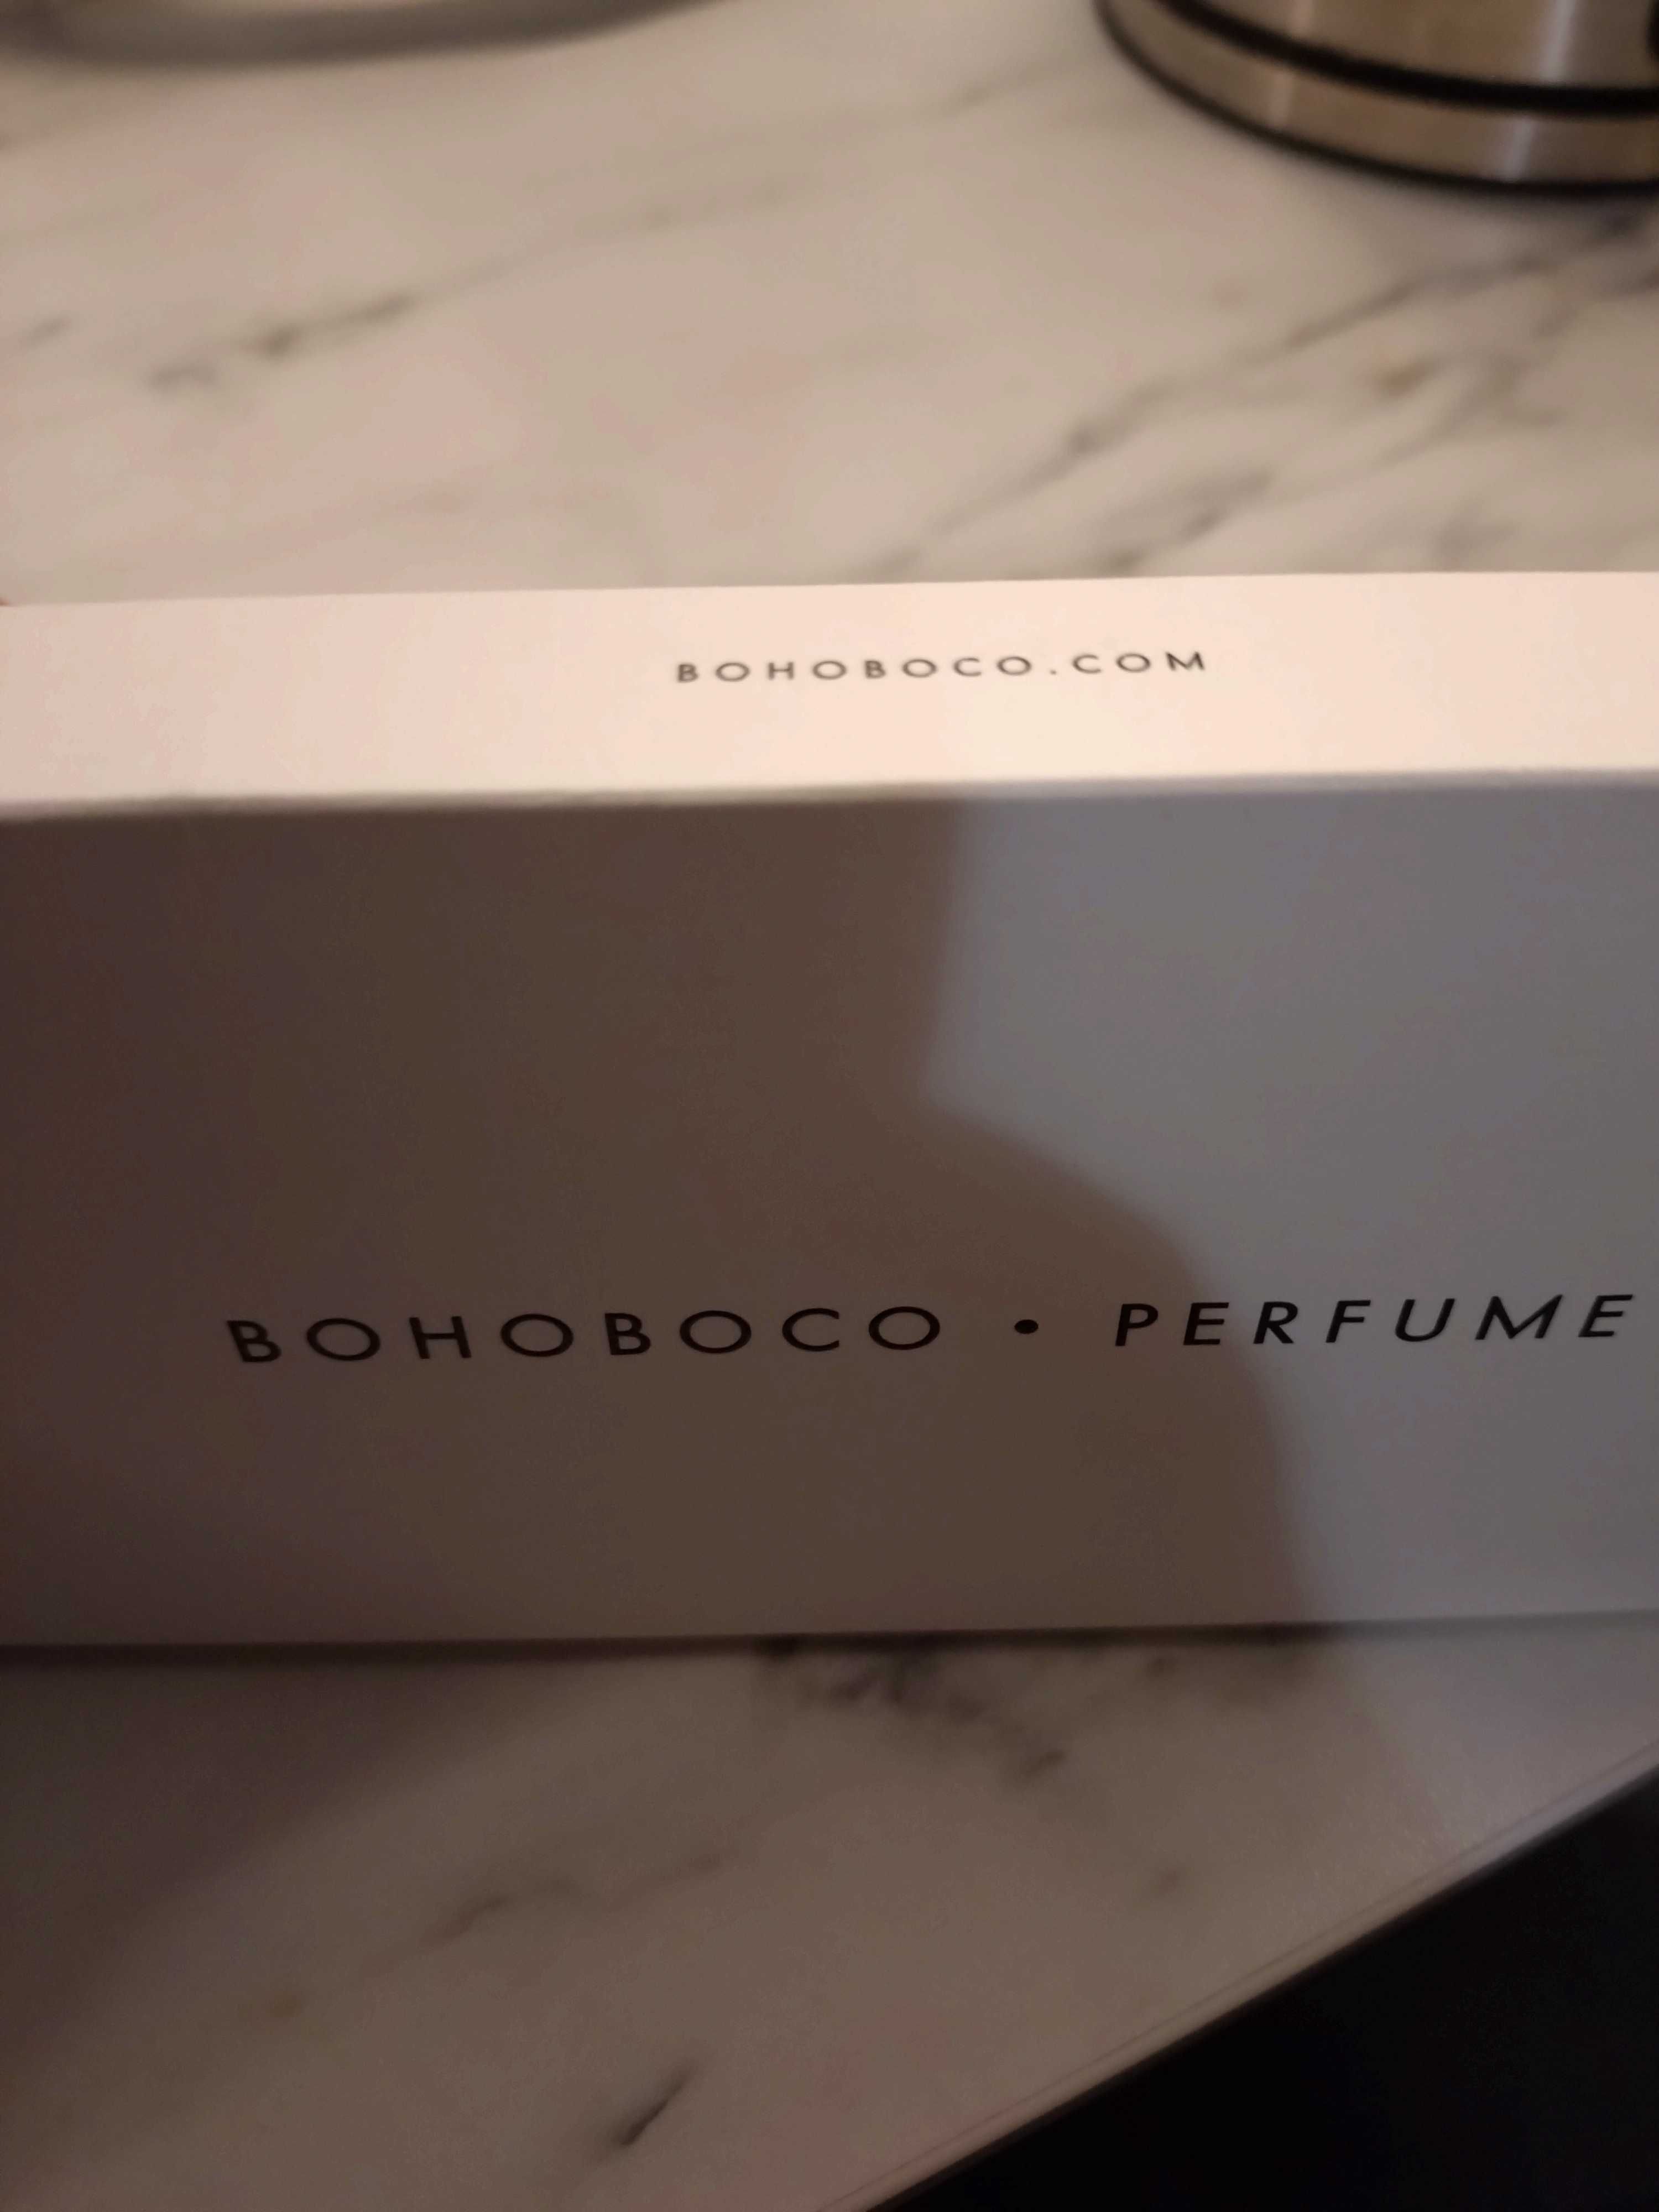 Bohoboco perfumki set